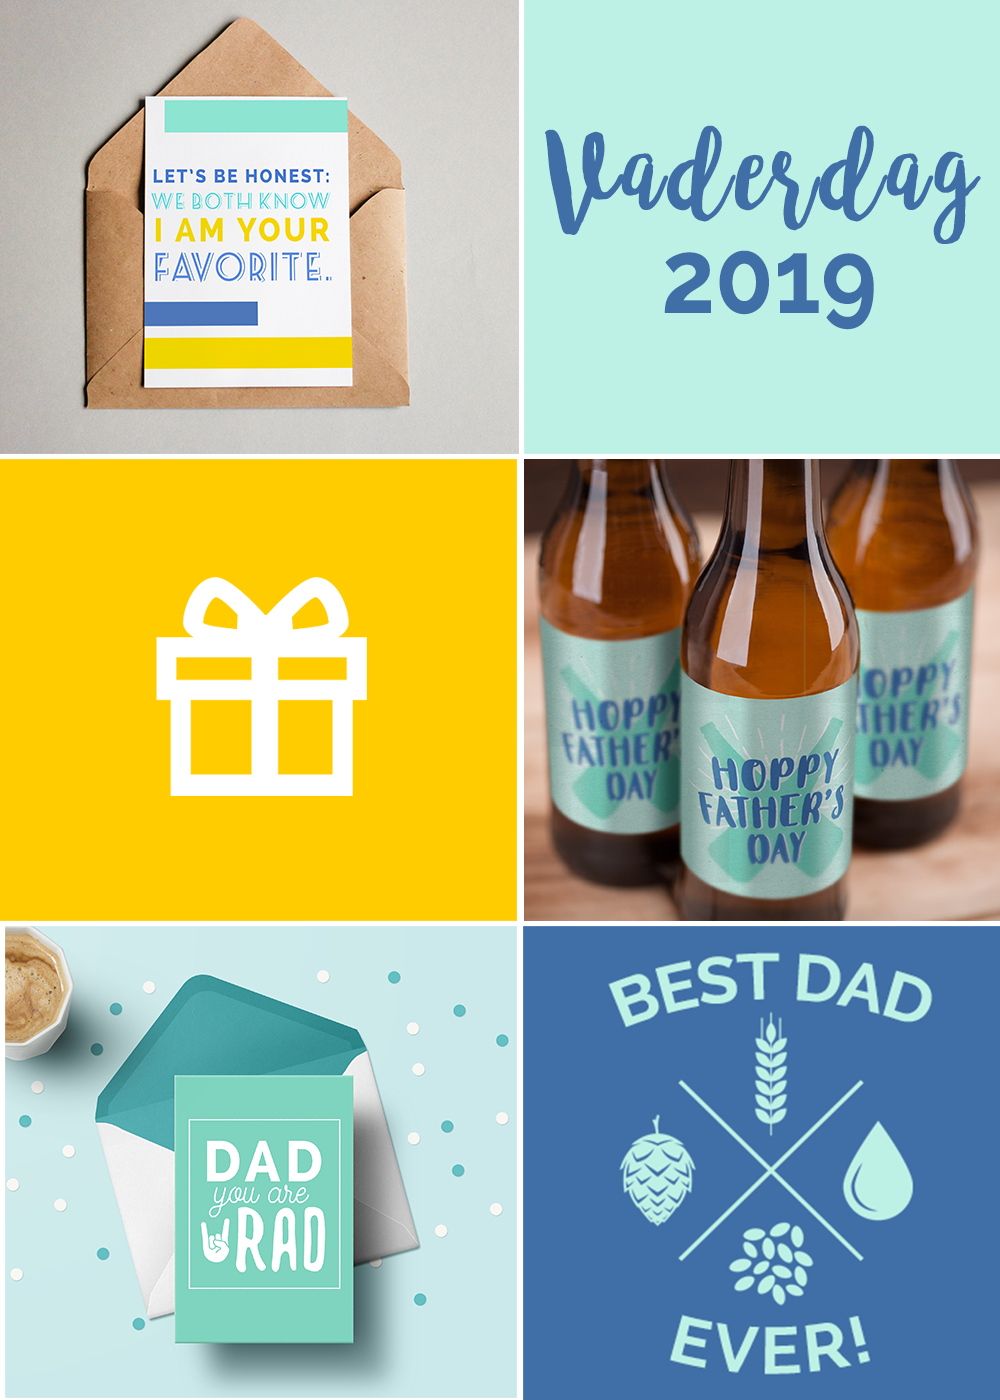 Verwonderend Vaderdag knutselen | Printable bierlabels en wenskaarten voor papa SO-56